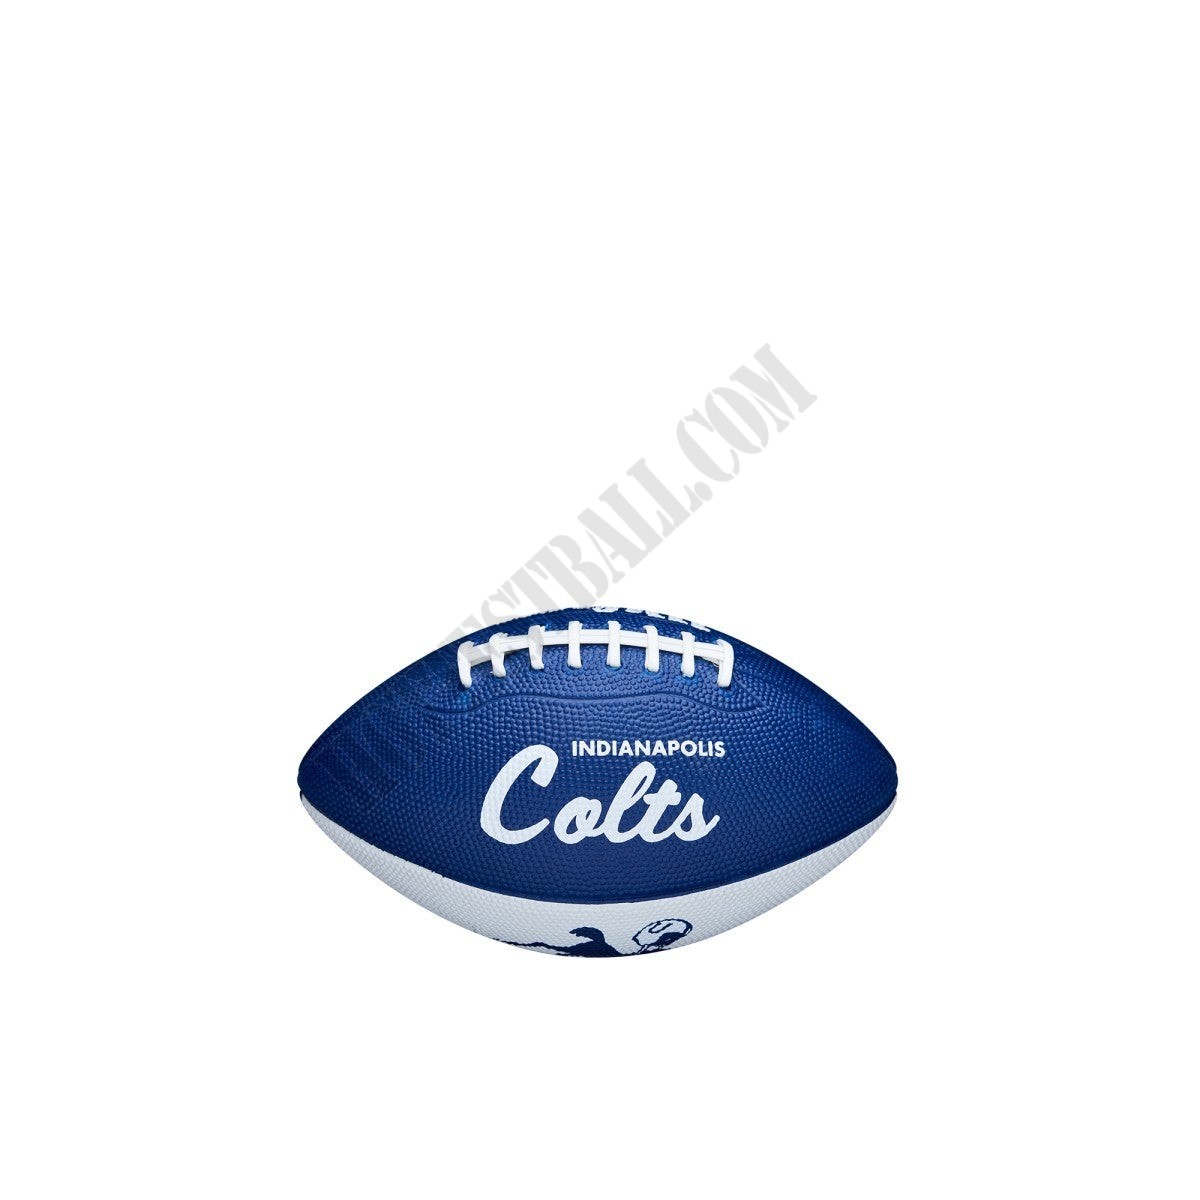 NFL Retro Mini Football - Indianapolis Colts ● Wilson Promotions - NFL Retro Mini Football - Indianapolis Colts ● Wilson Promotions